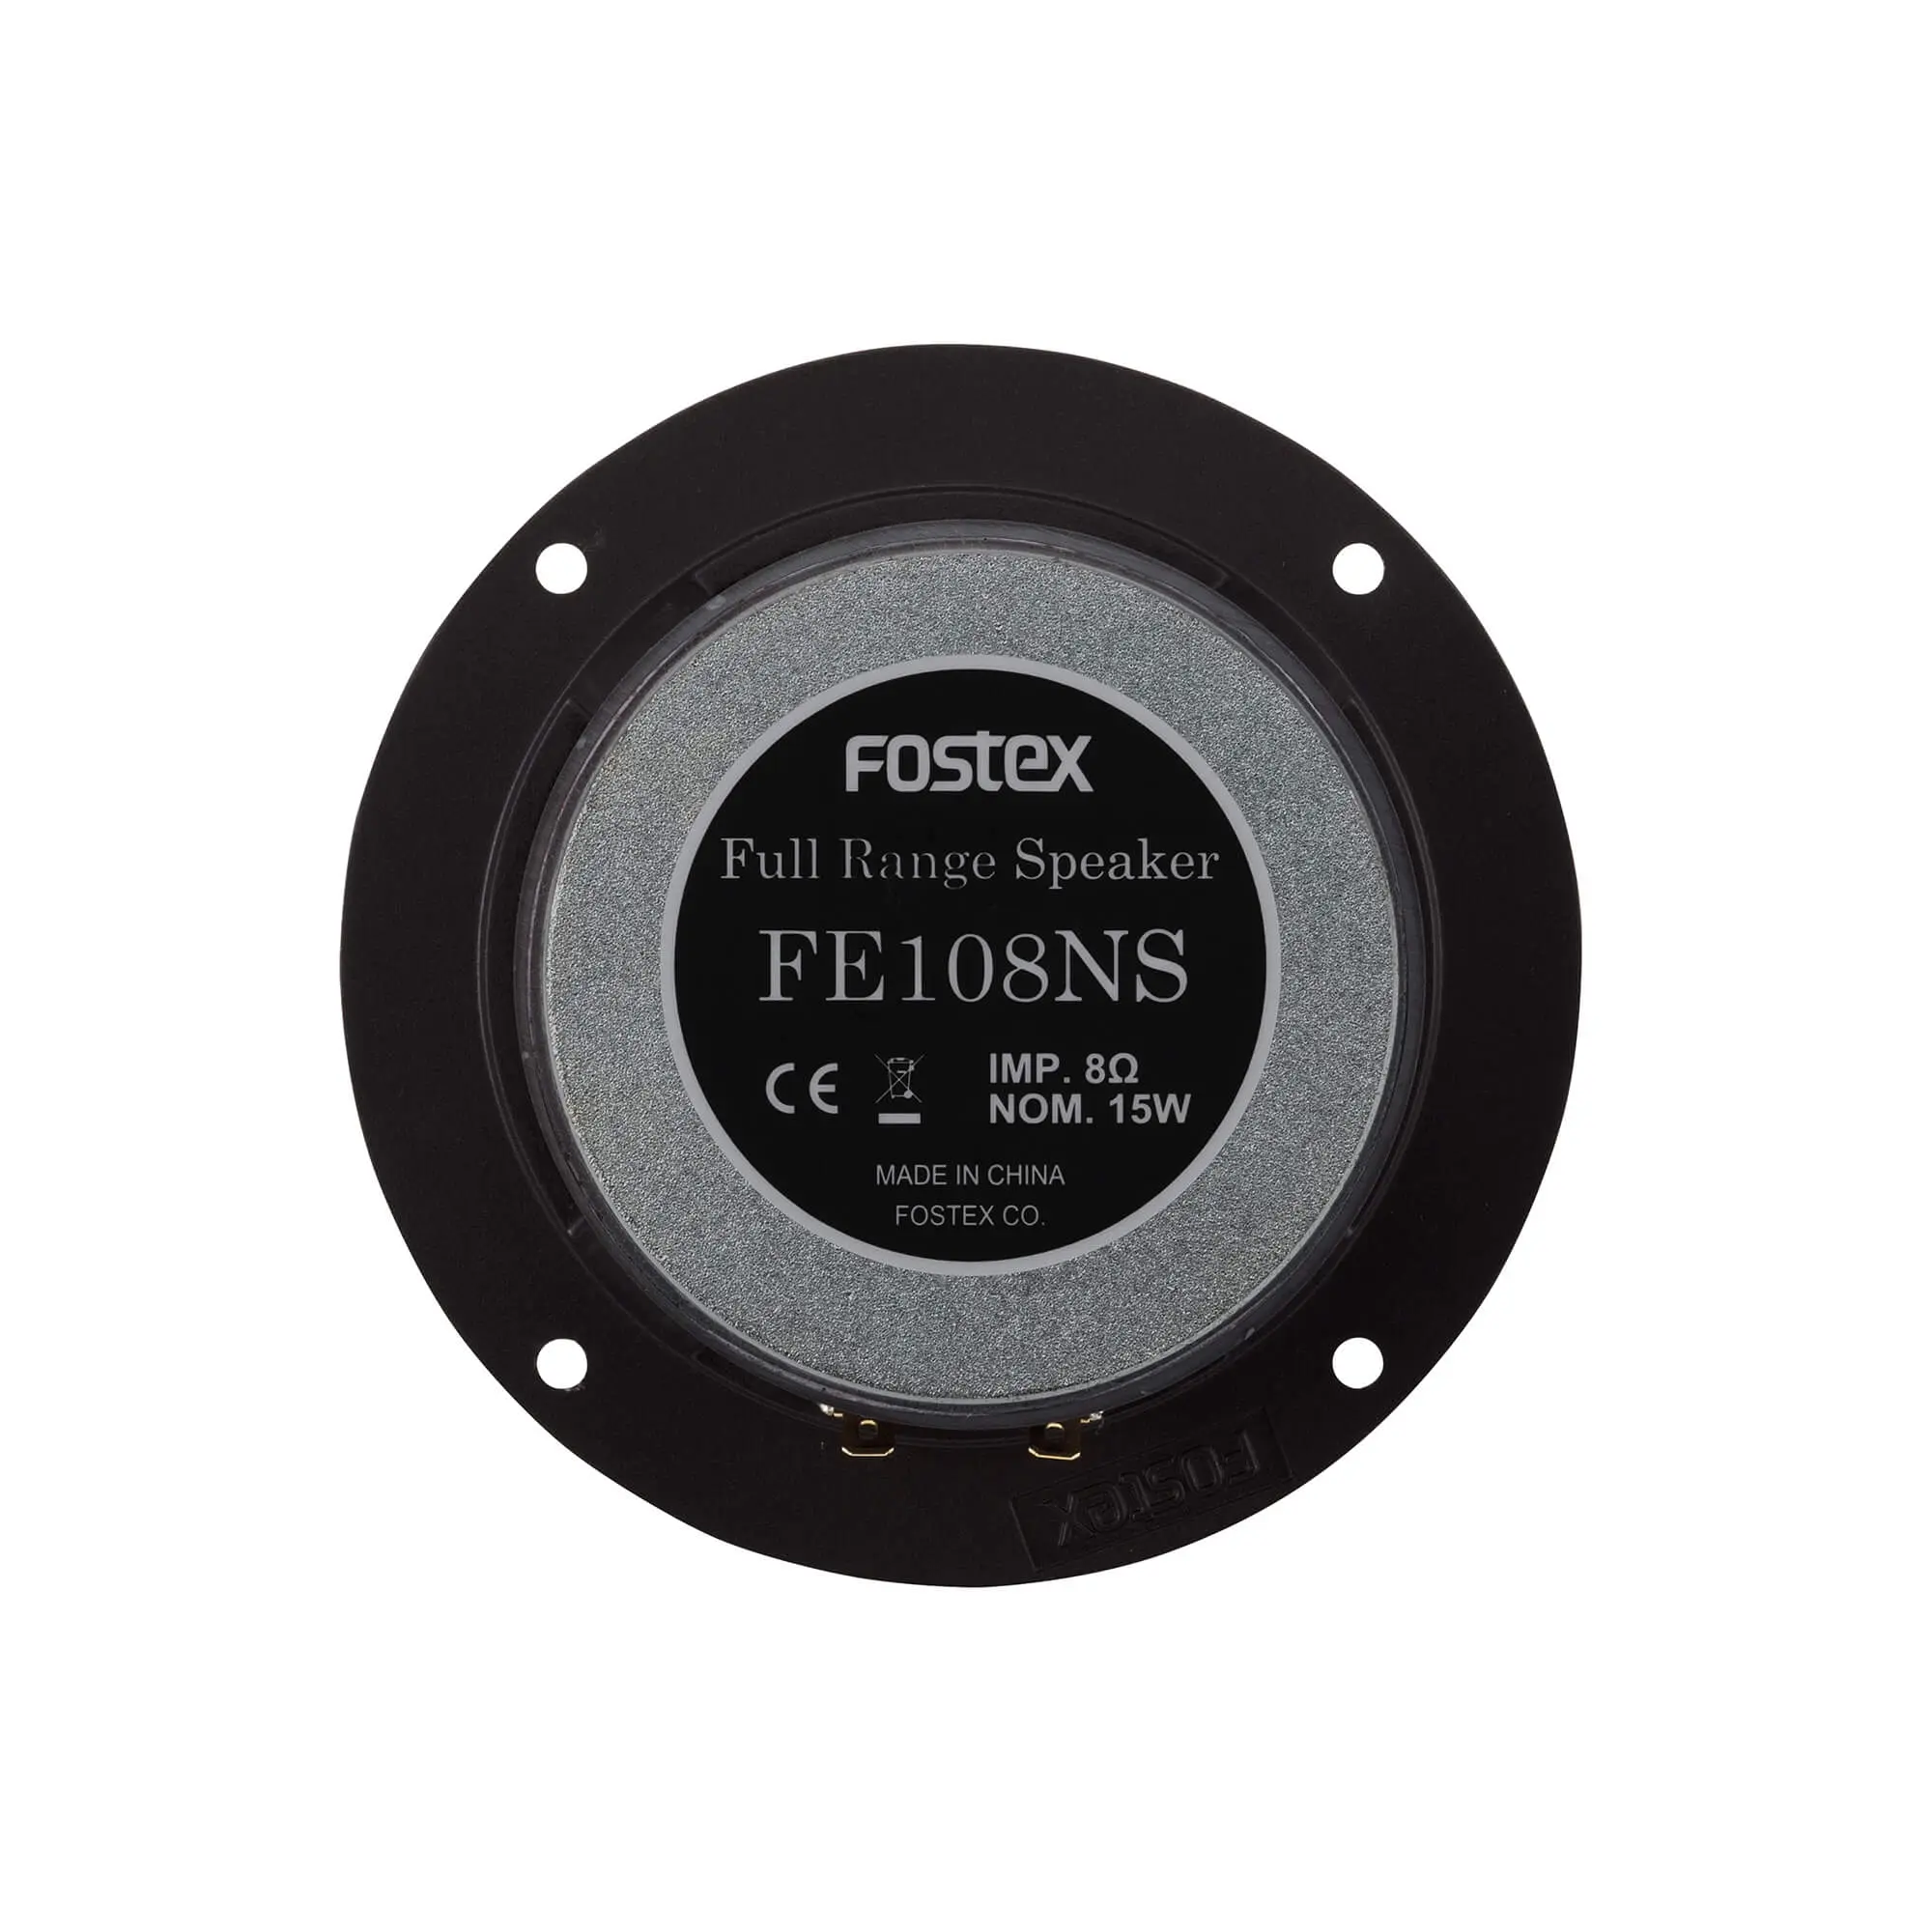 FE108NS | Fostex(フォステクス)